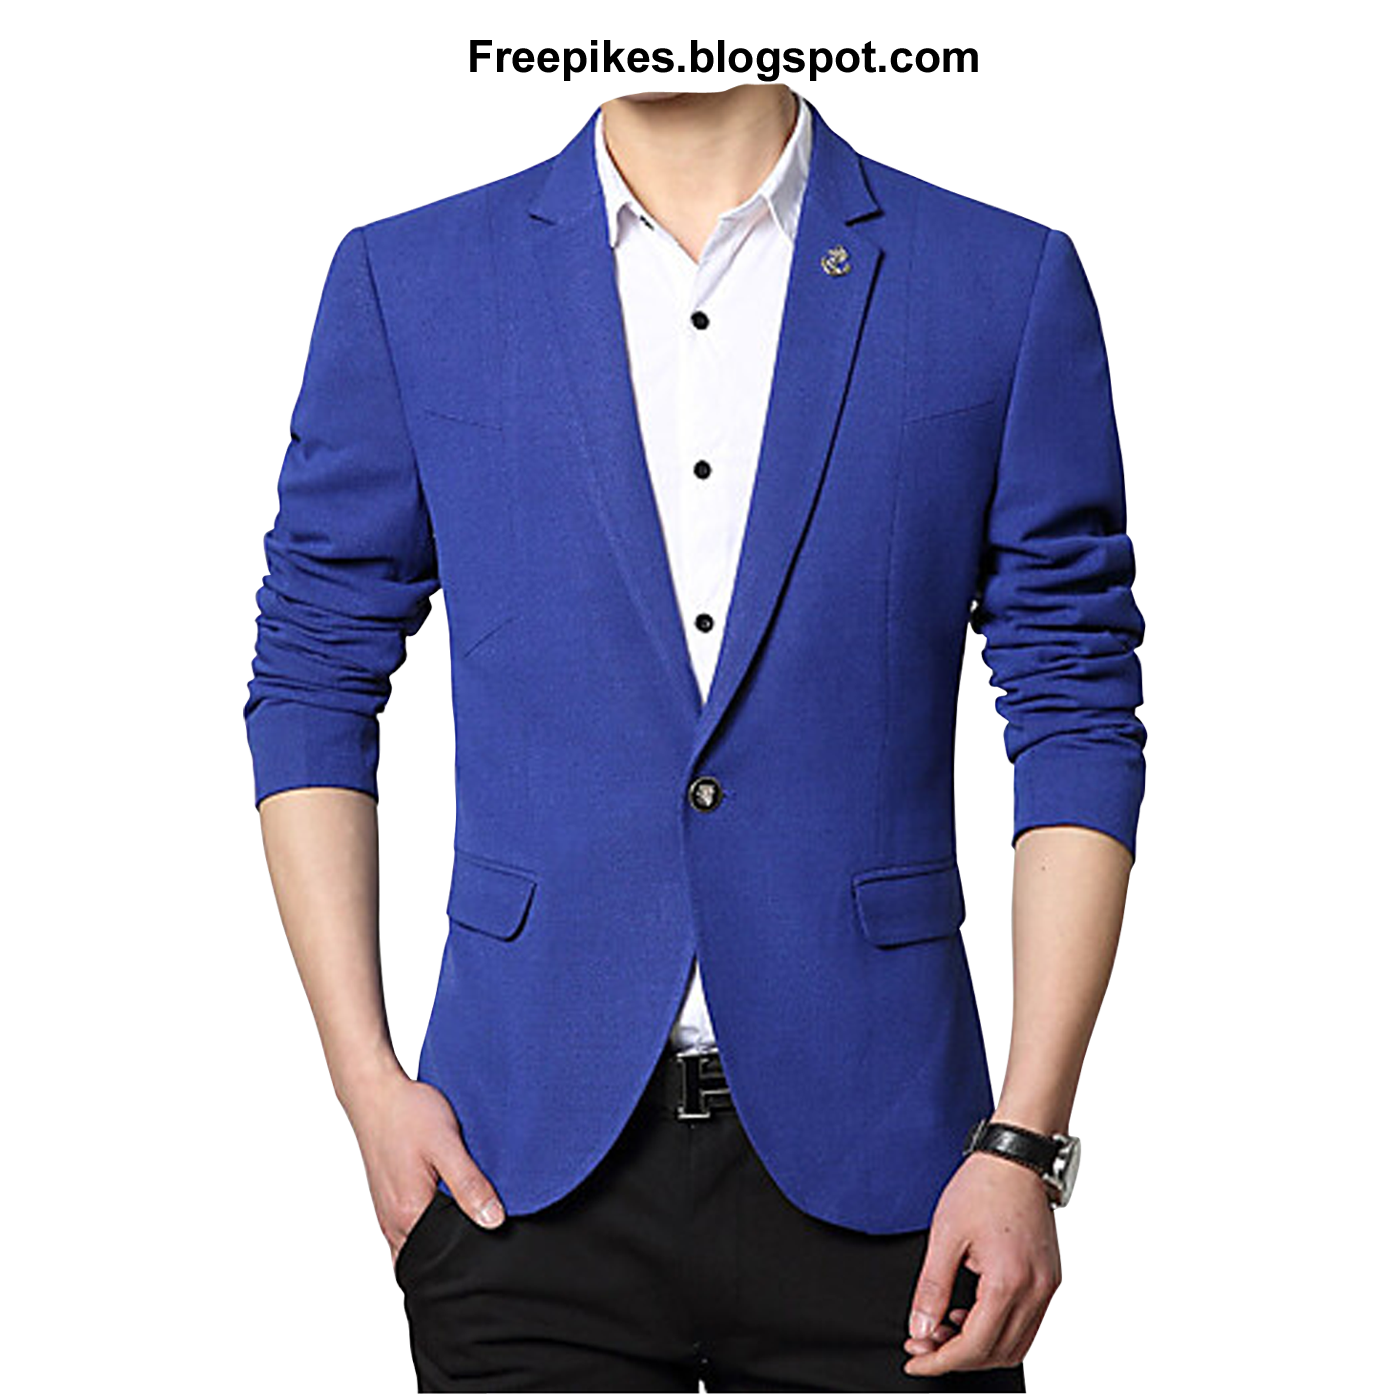 PSD Dress in Blue Color - Mens Coat Dress ~ FreePikes